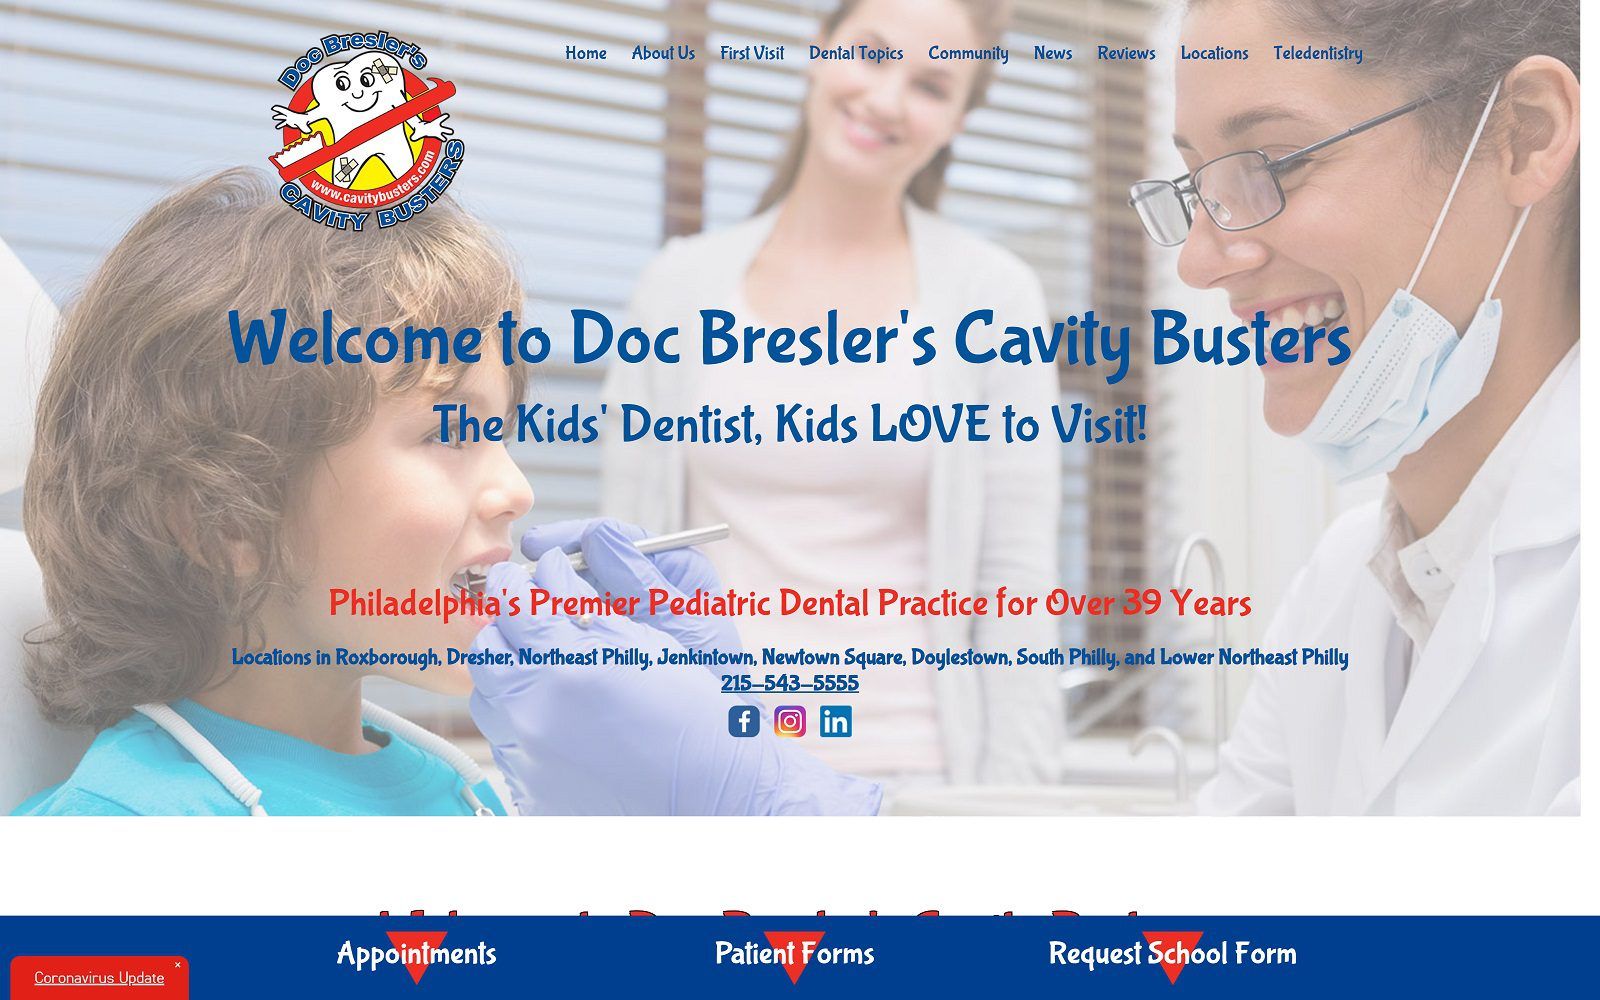 The screenshot of doc bresler’s cavity busters website